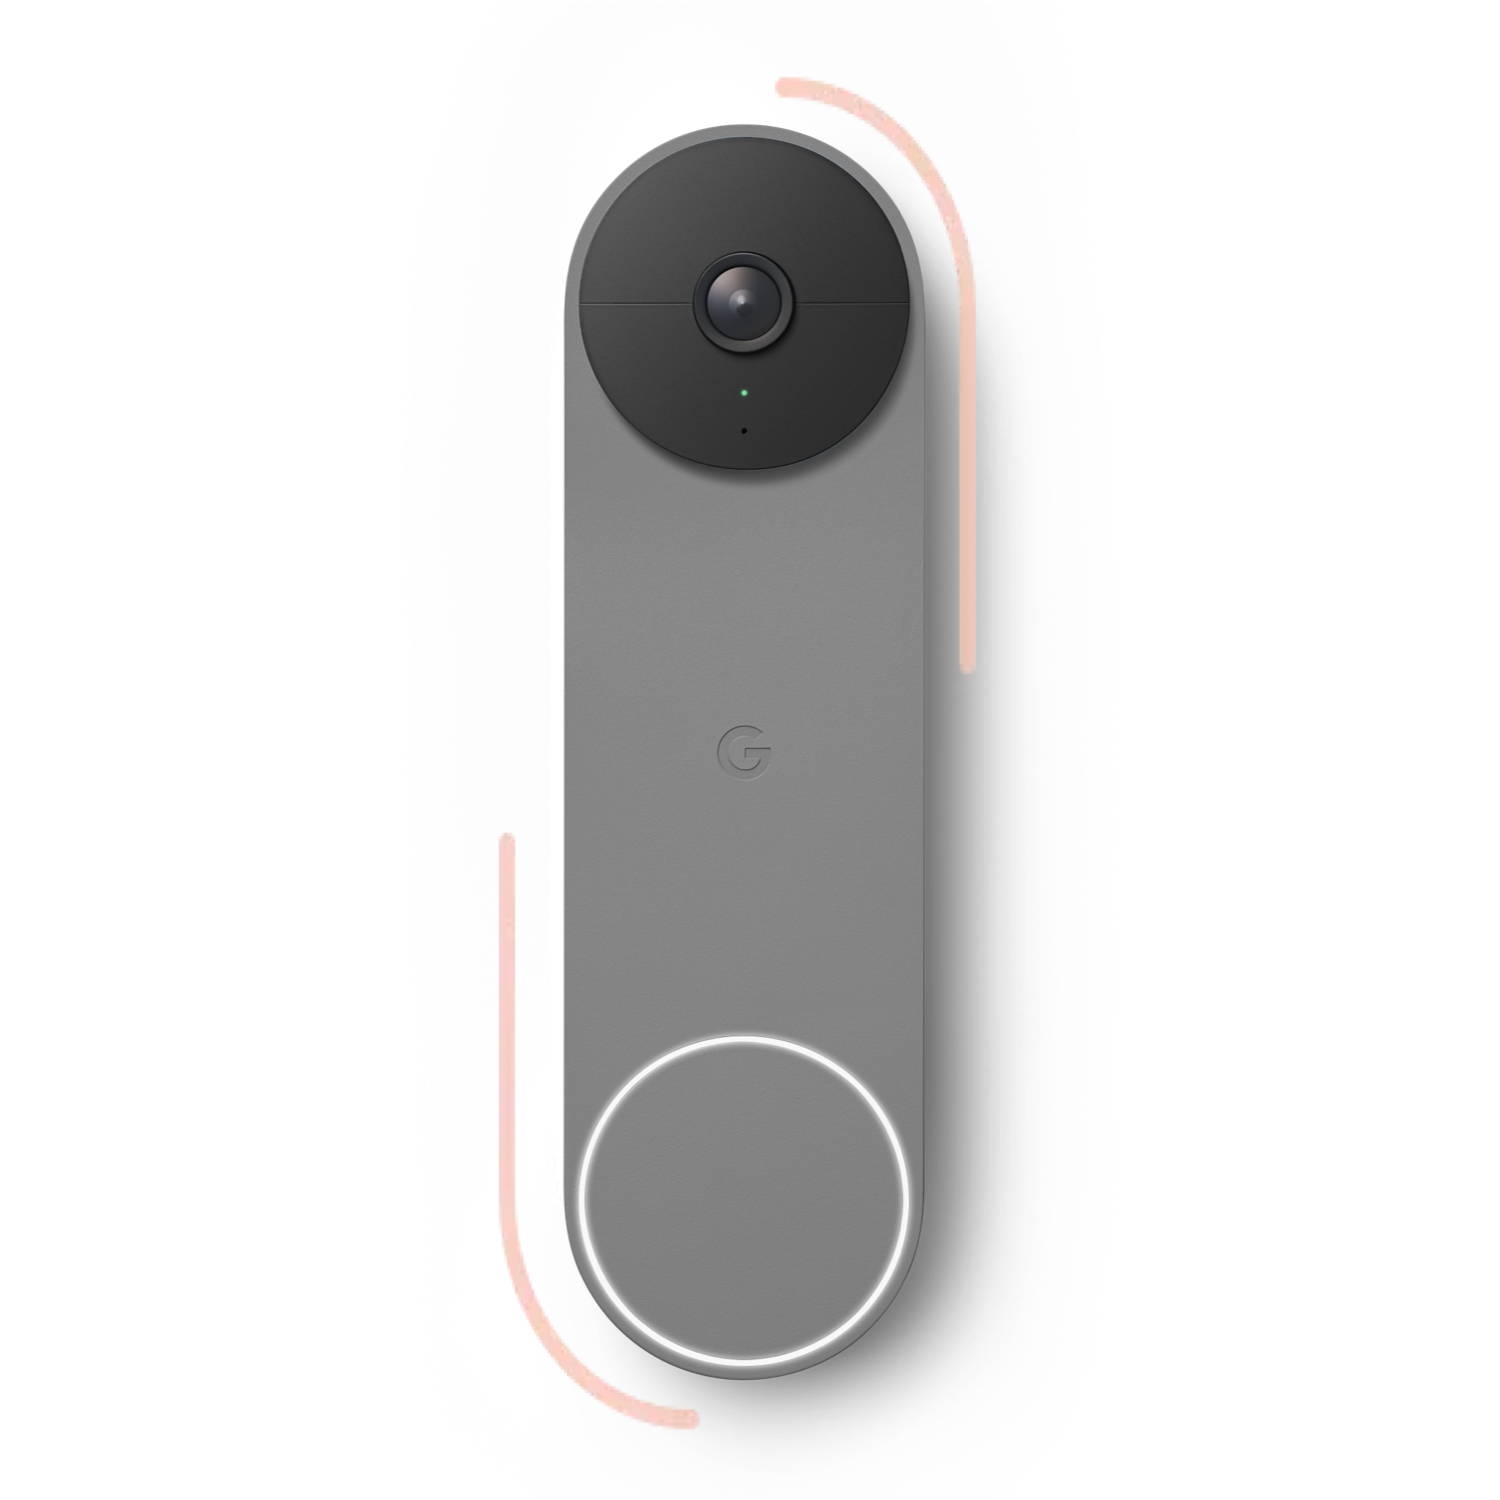 video doorbells can be installed by OnTech